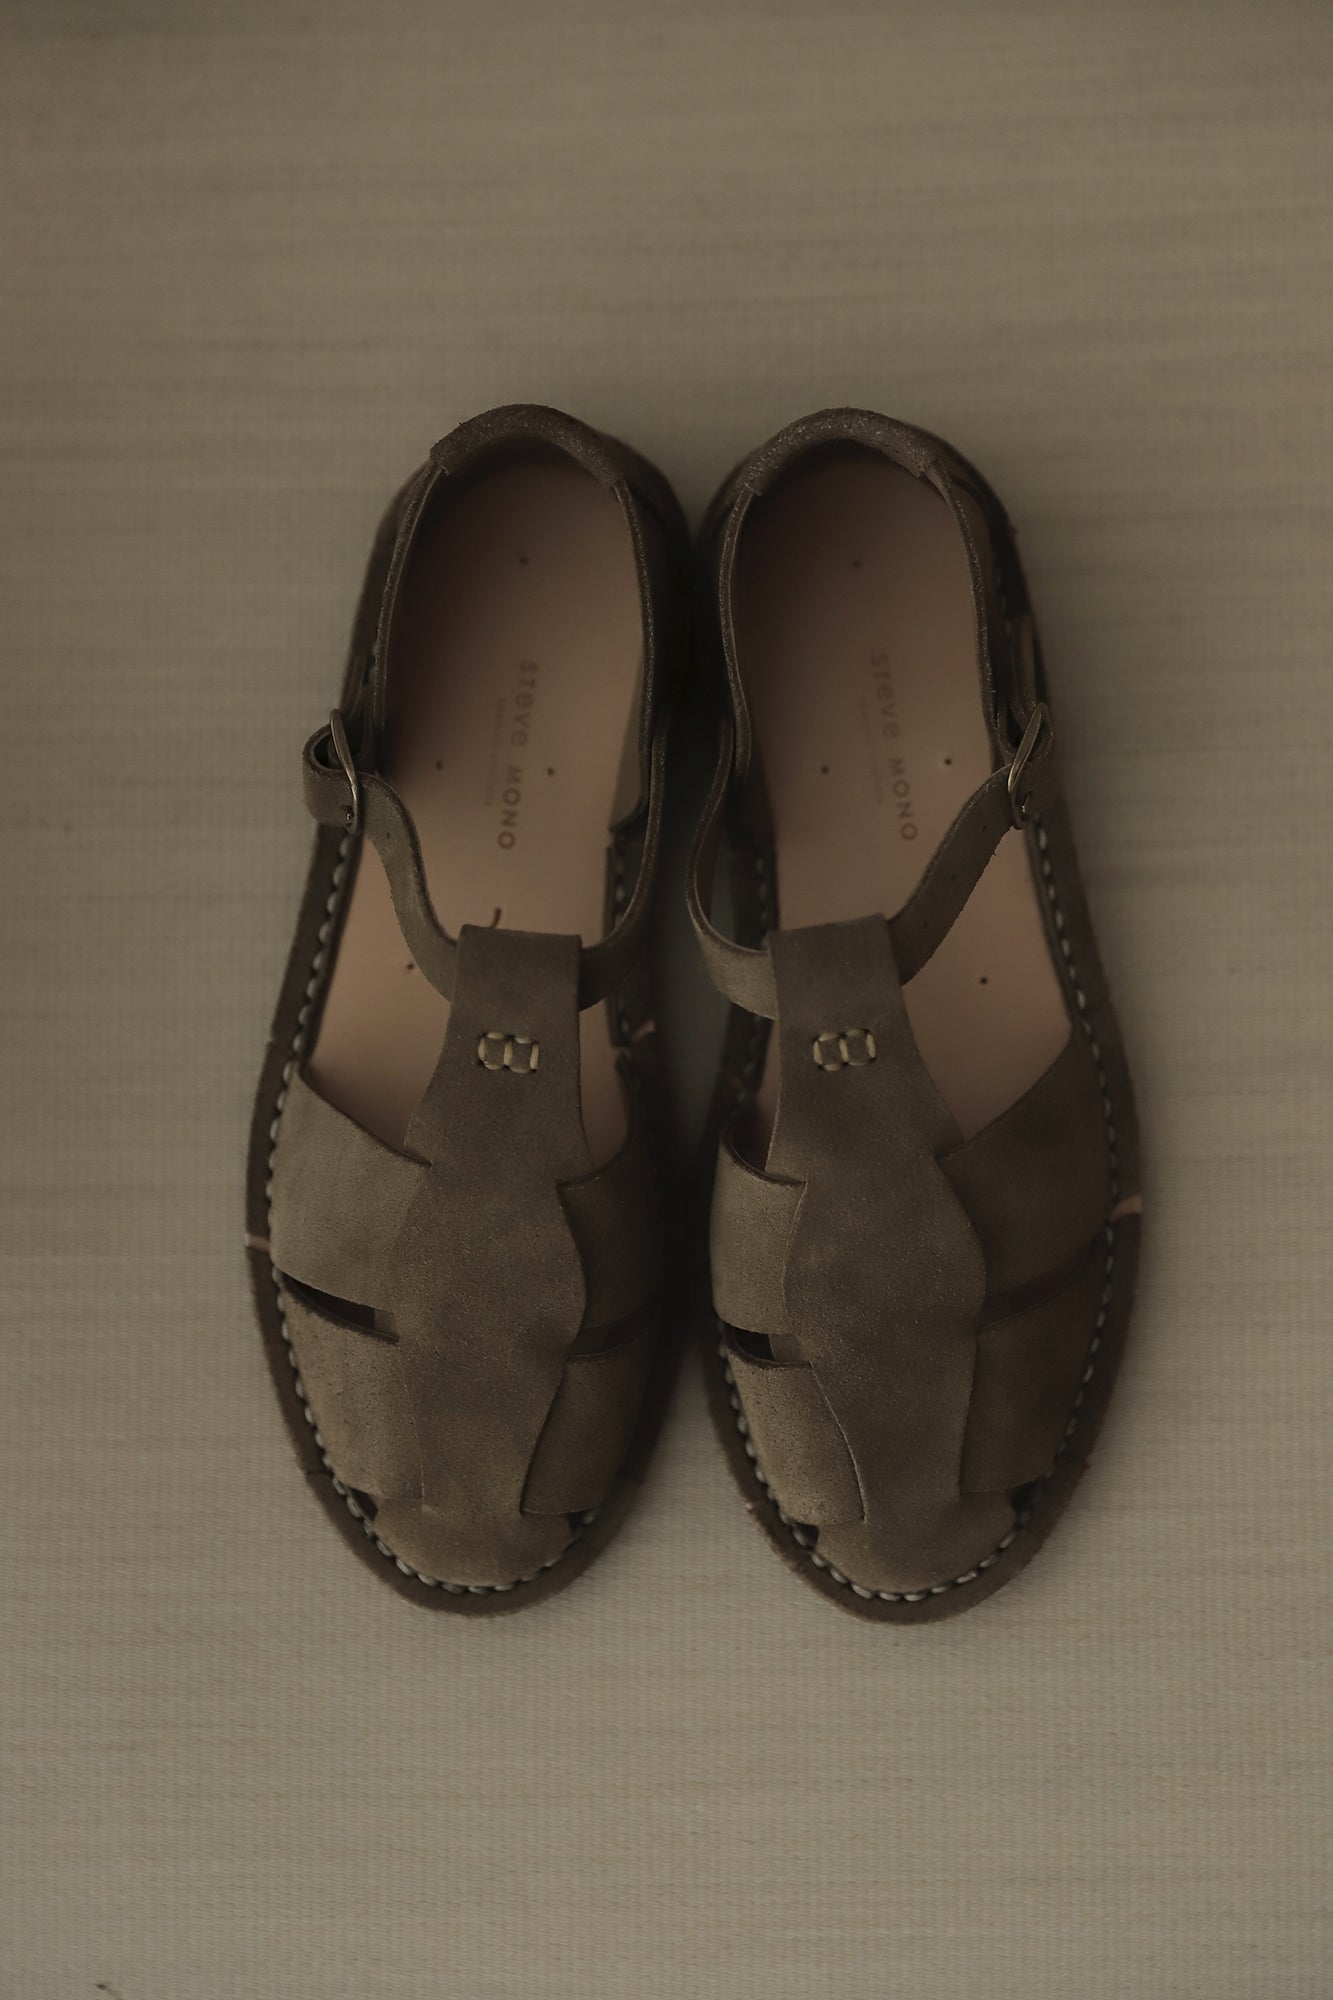 STEVE MONO - Artisanal Sandals 10/17 KHAKI